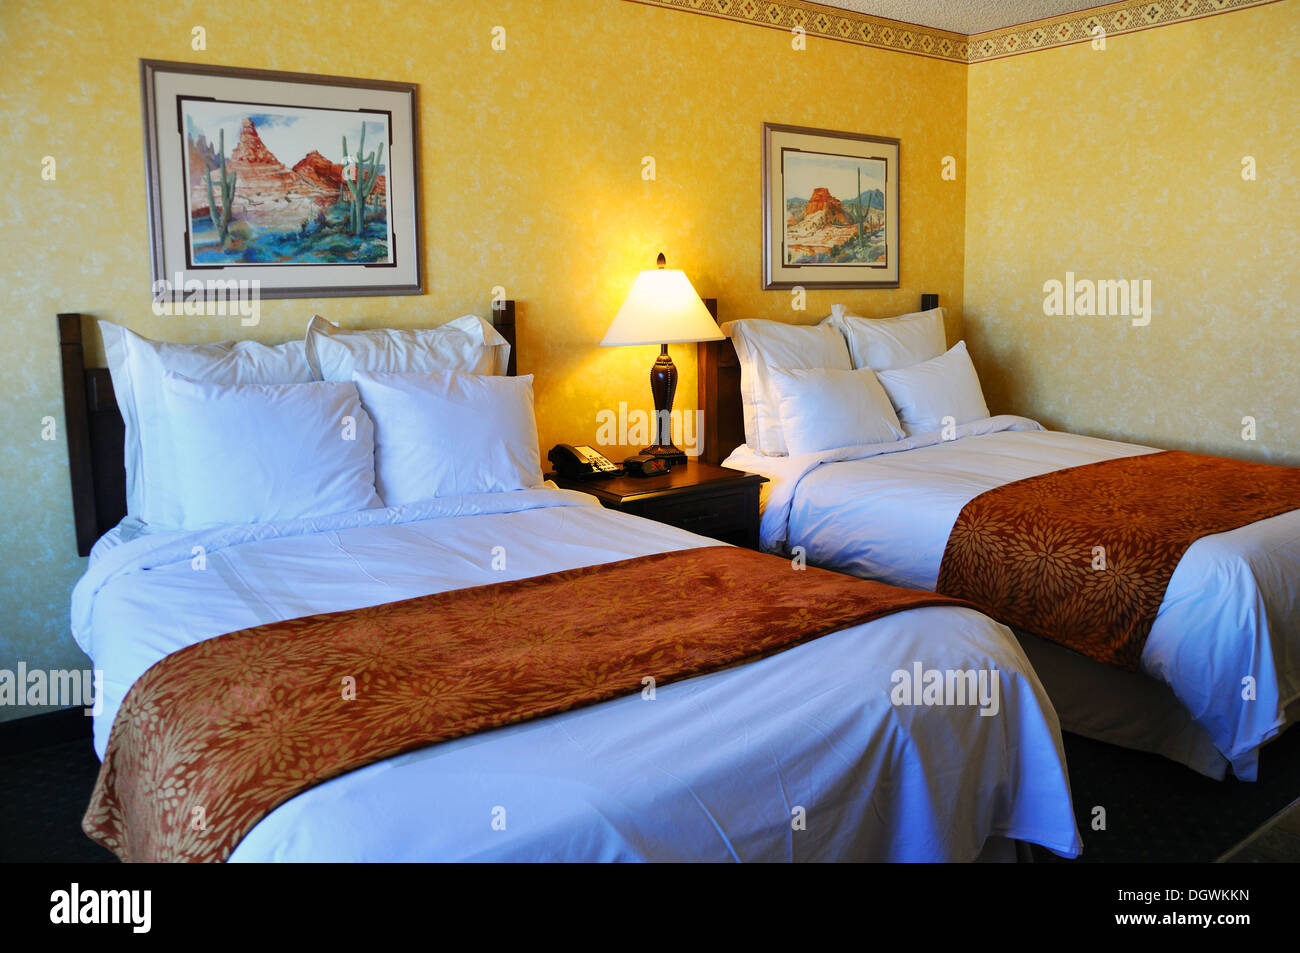 Marriott hotel room, Albuquerque, New Mexico, USA Stock Photo